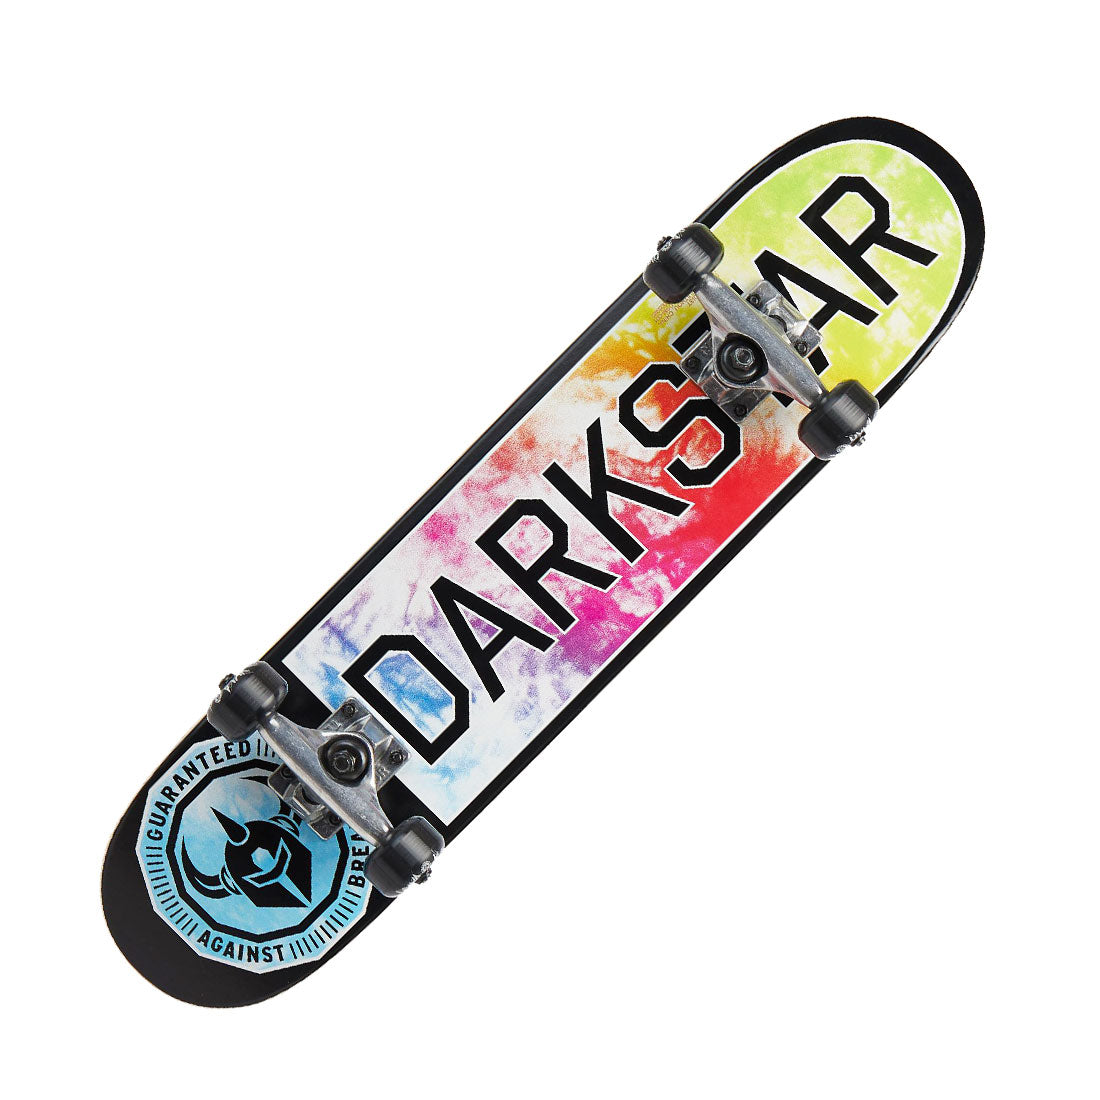 Darkstar Timeworks 6.5 Youth Soft Top Complete Skateboard Completes Modern Street